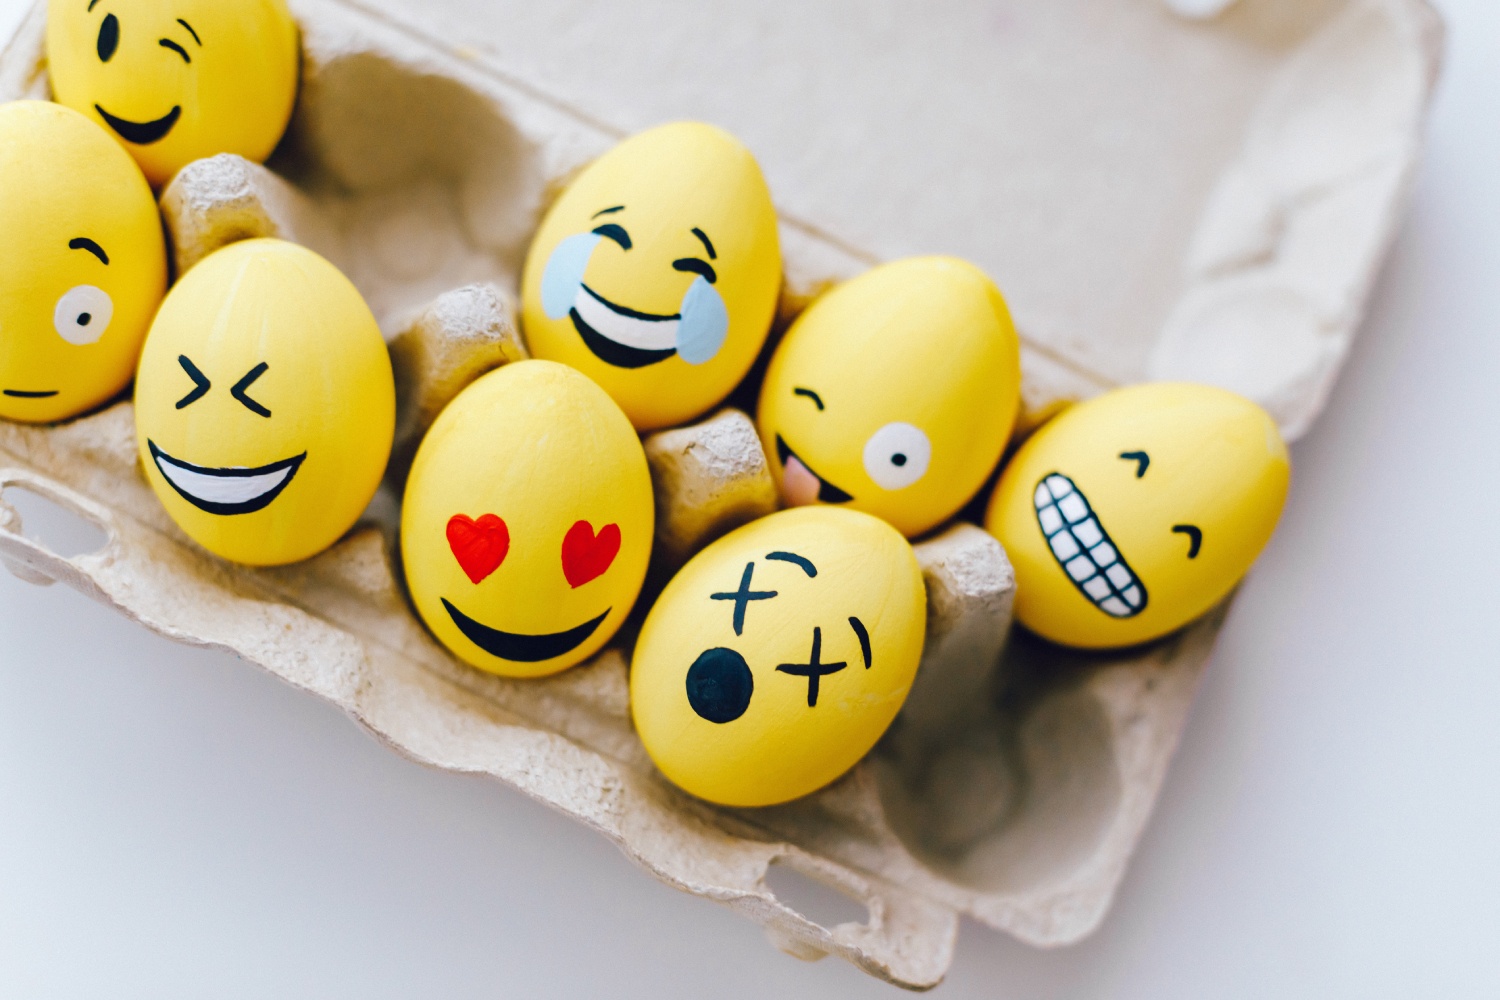 eggs painted as emojis in an egg carton